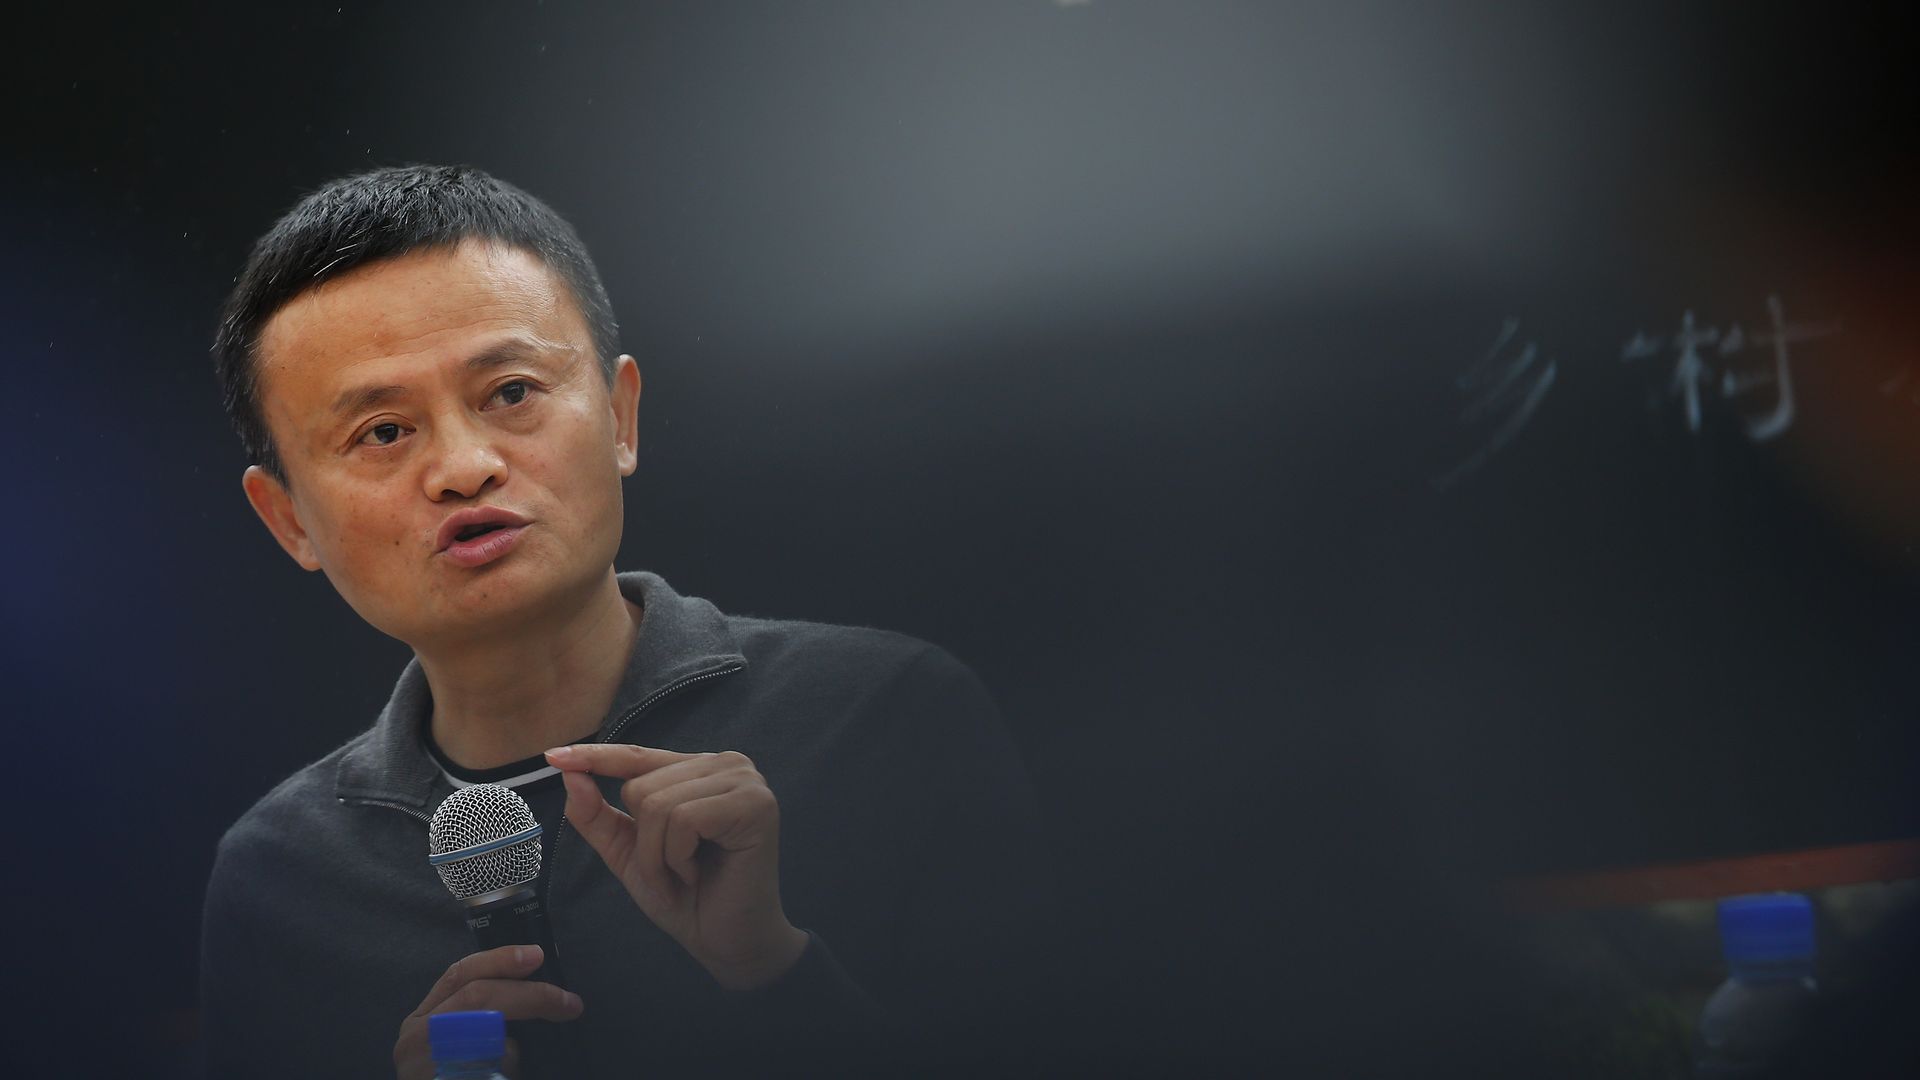 Jack Ma giving a talk.